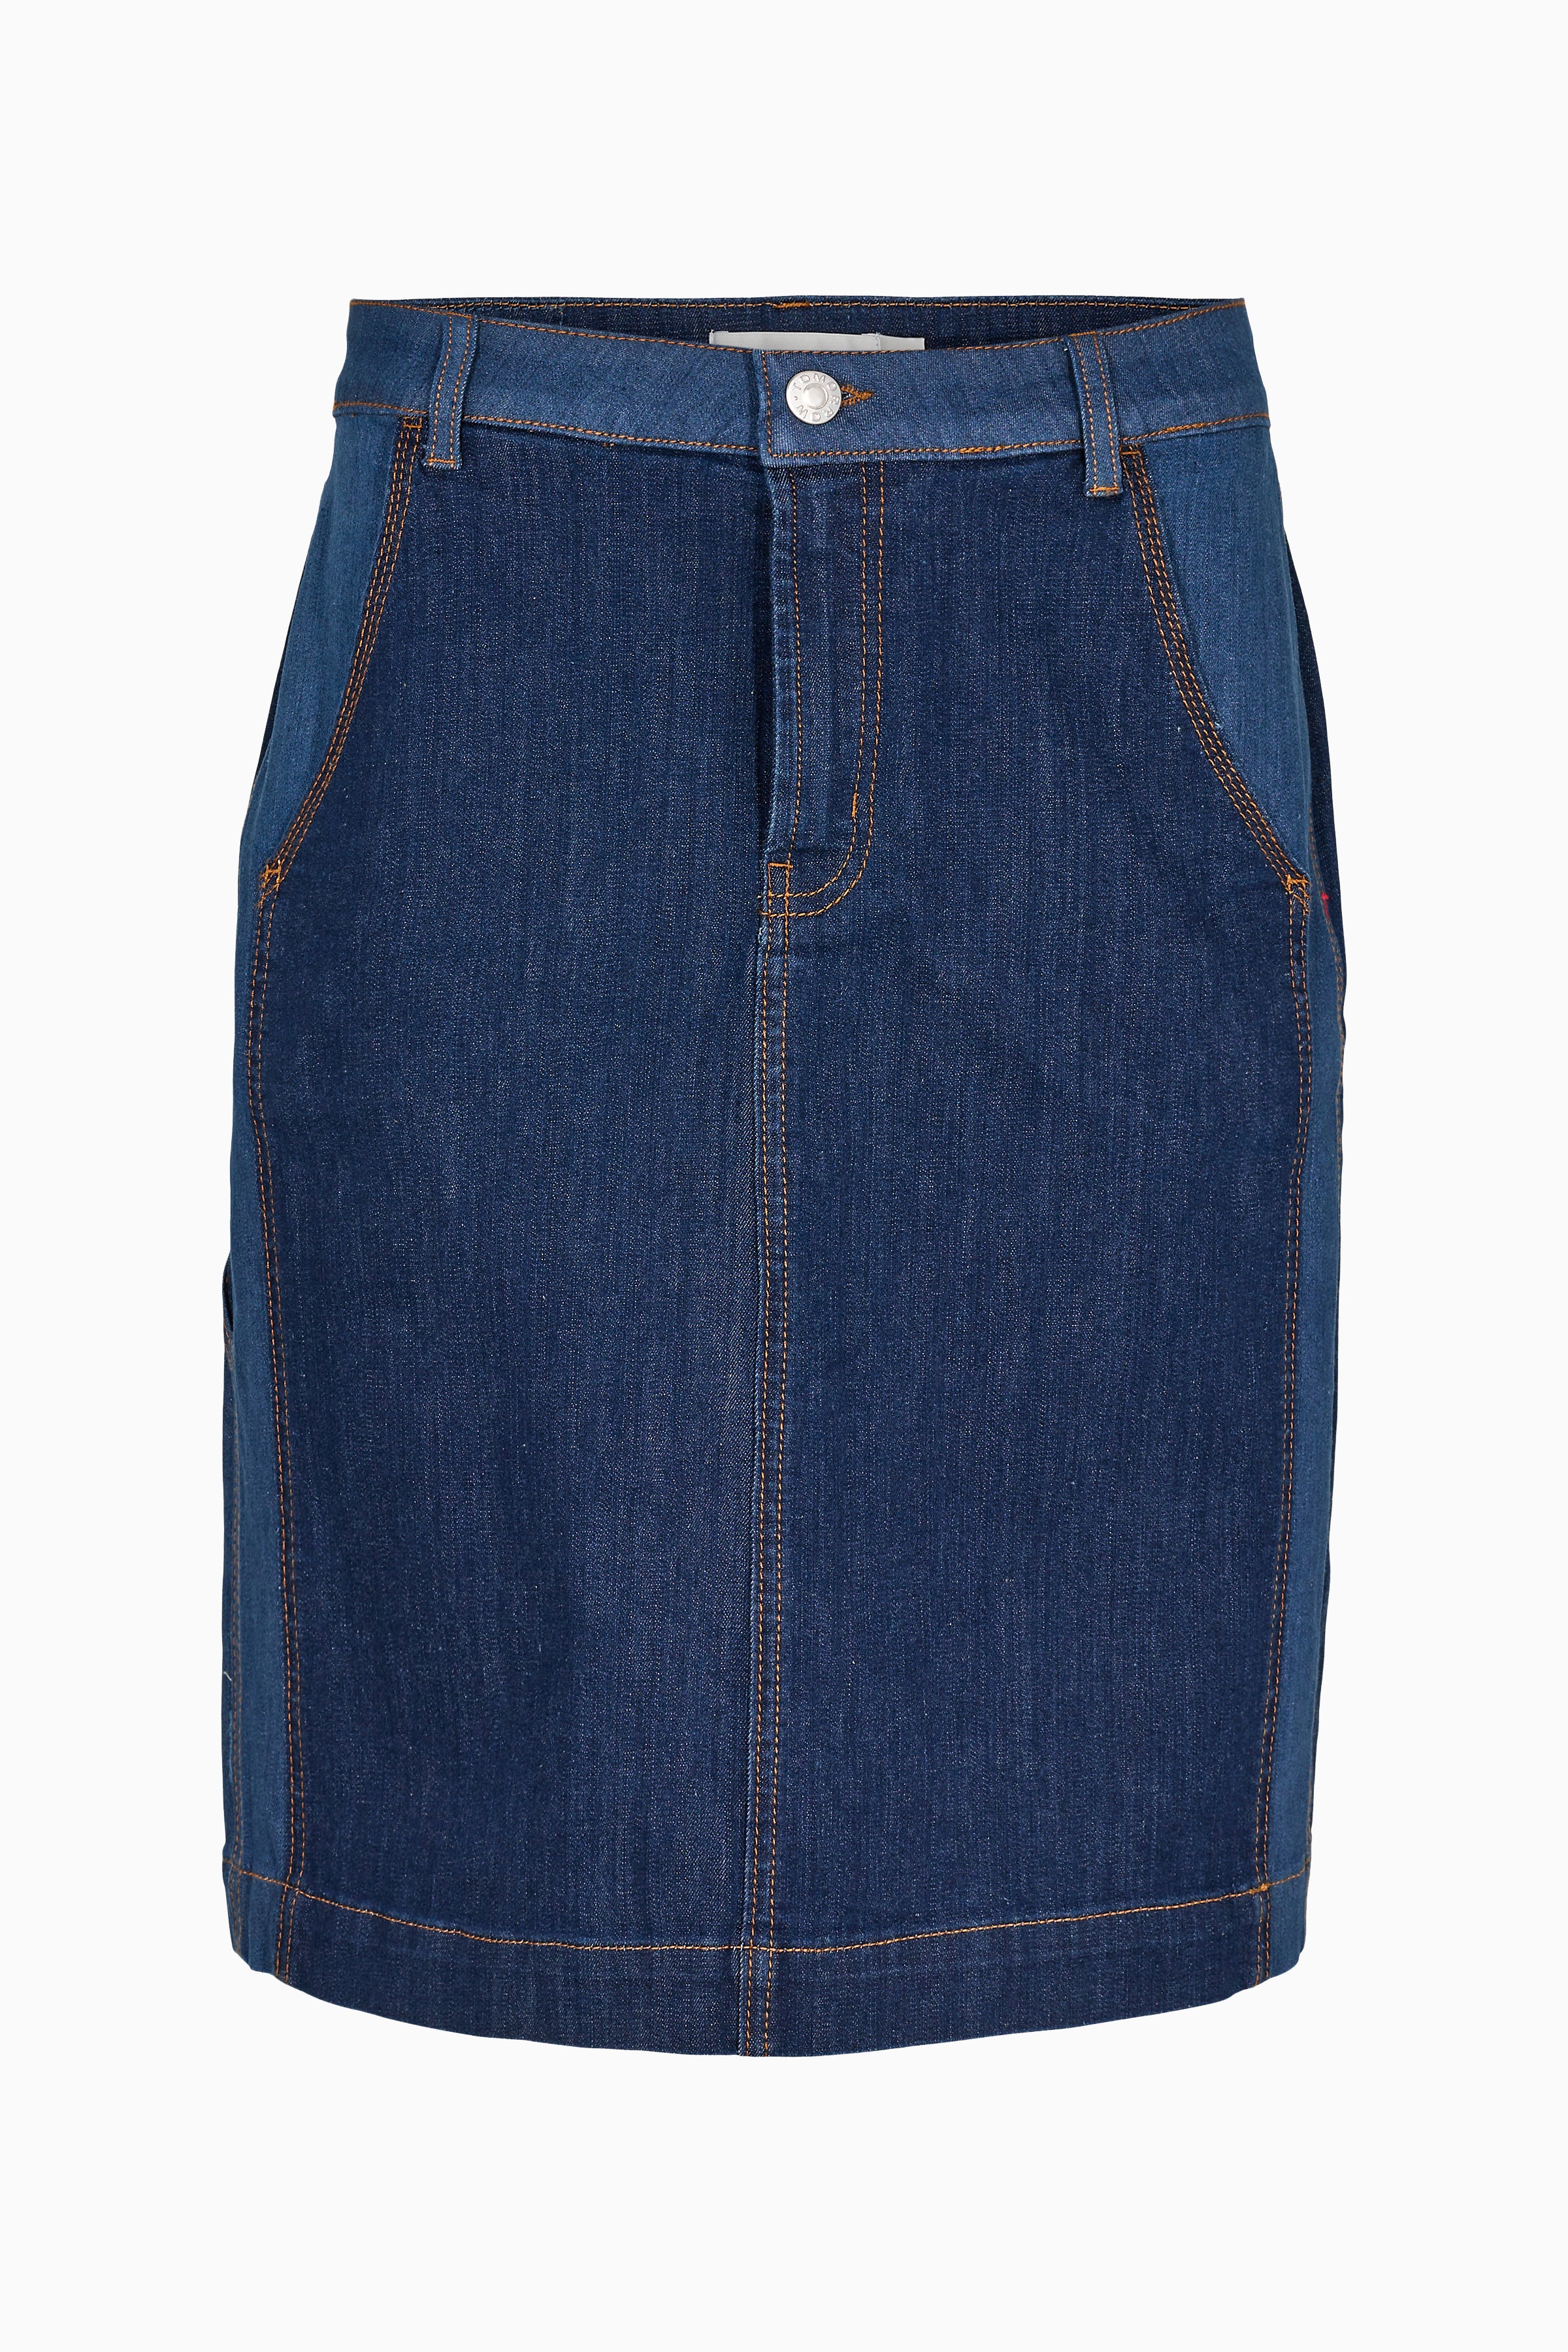 Tomorrow TMRW Lincoln Worker Block Skirt - Florence Skirt 51 Denim Blue